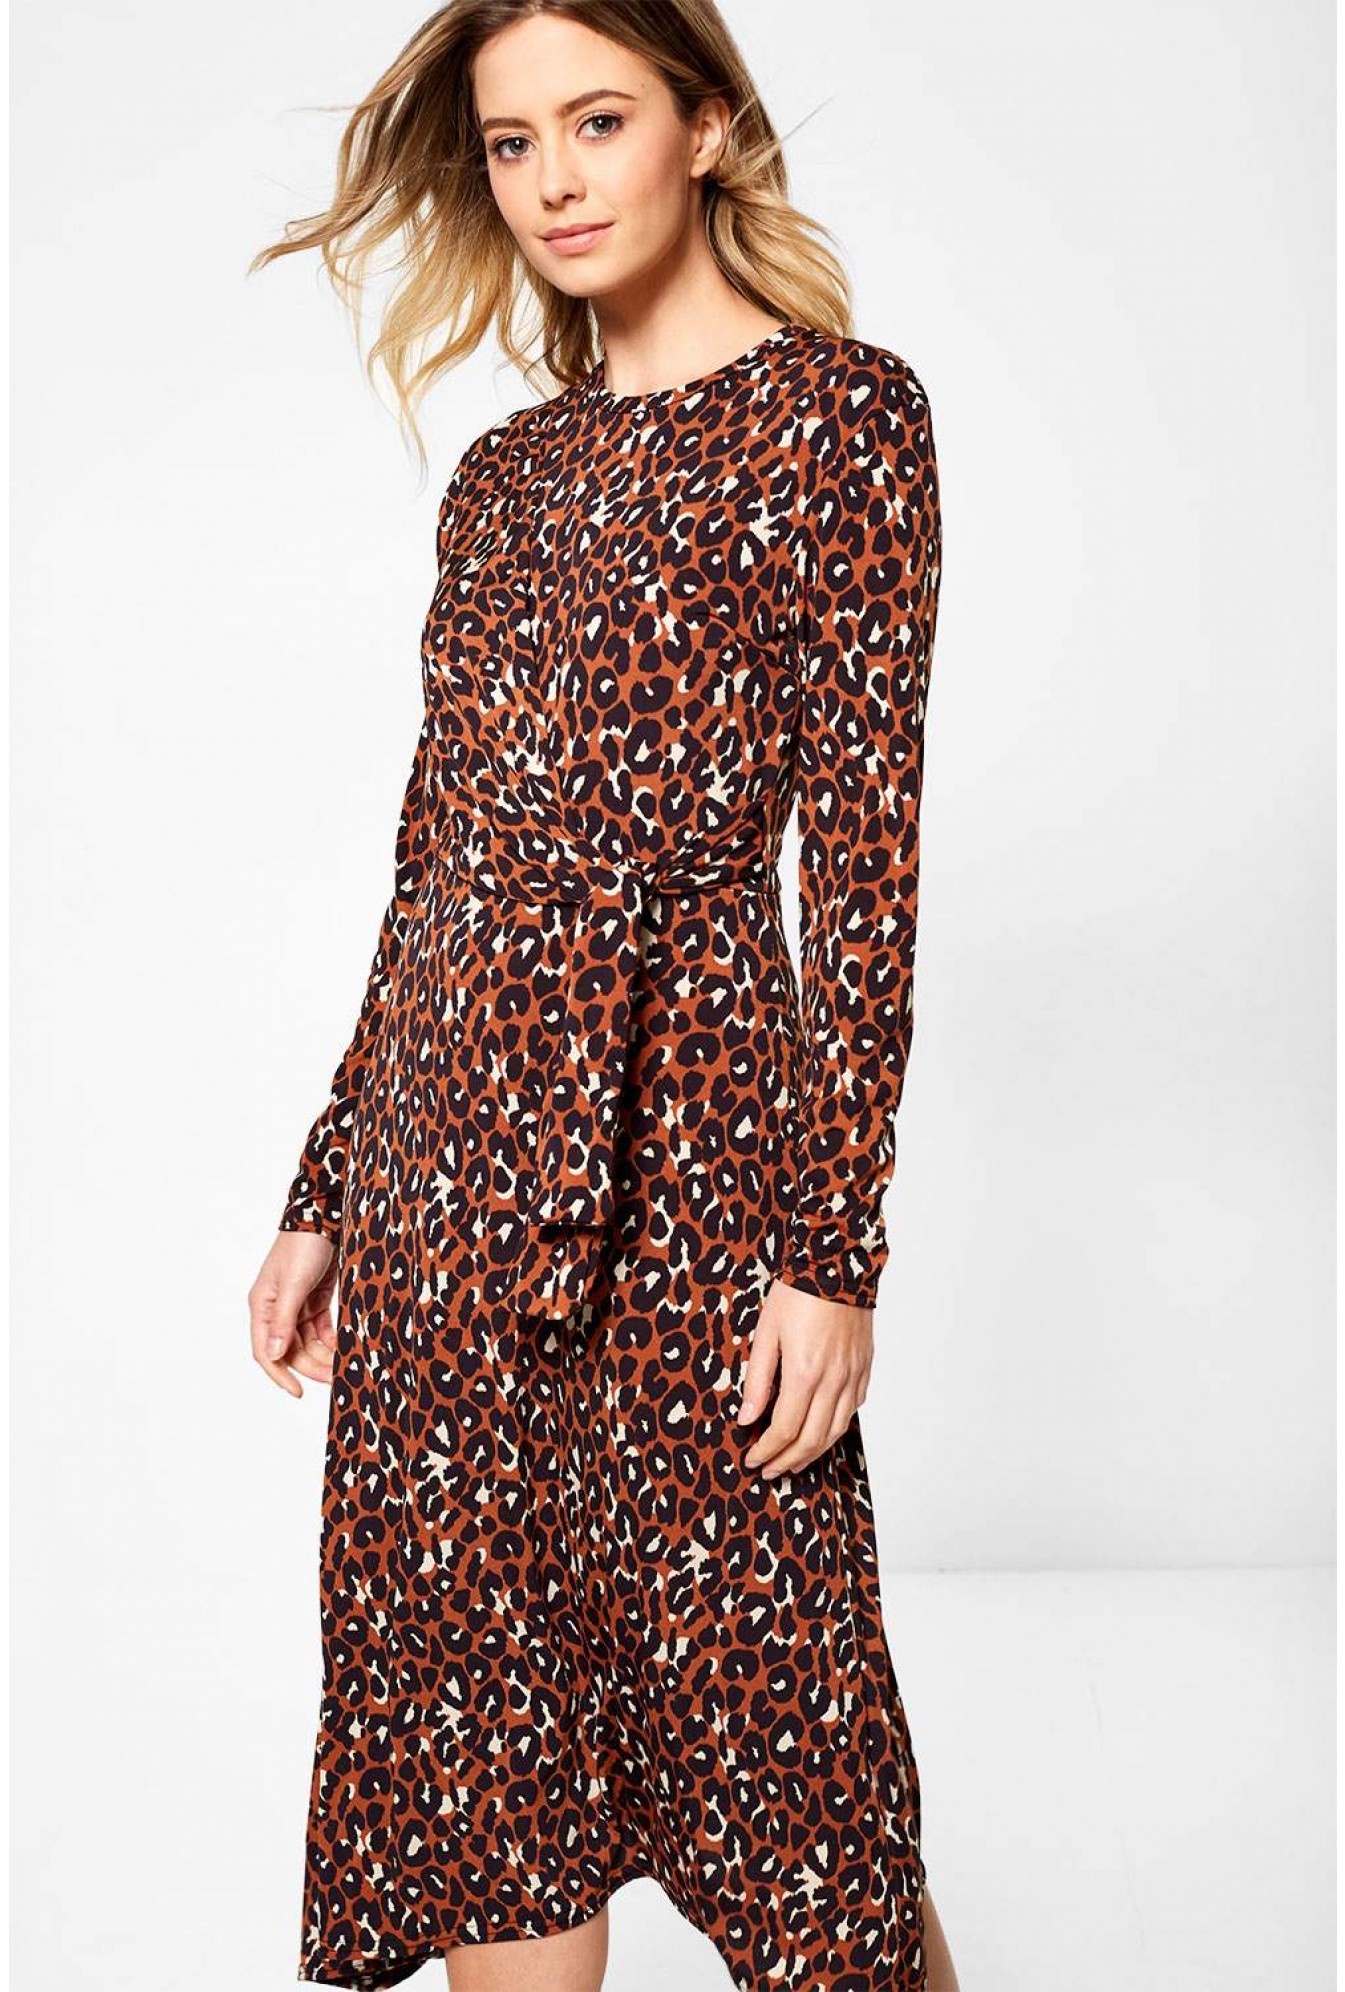 full length leopard print dress